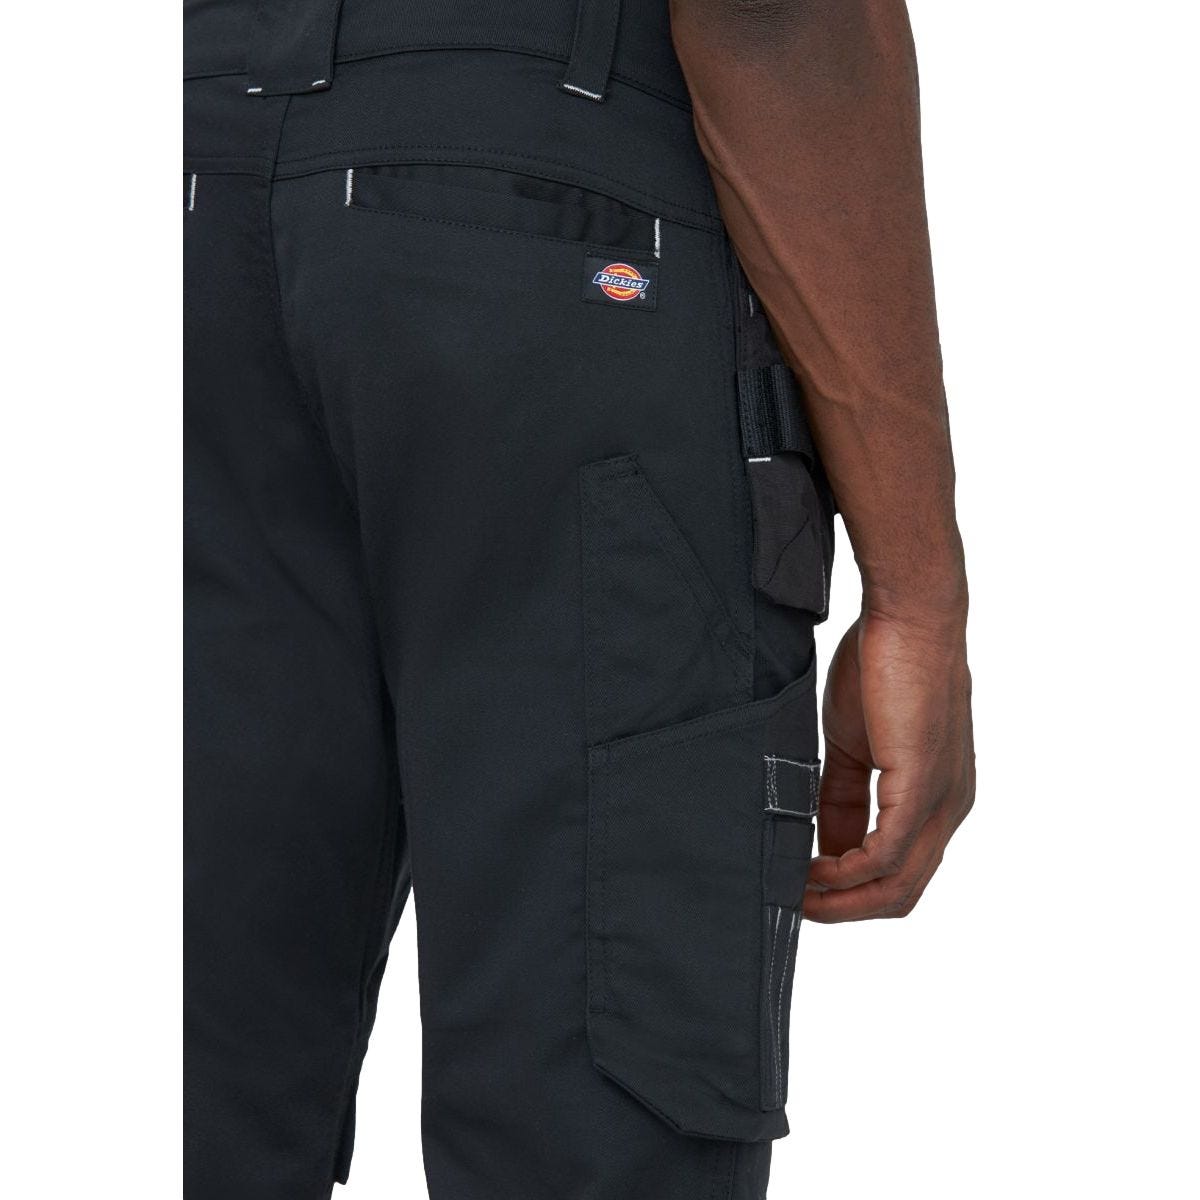 Pantalon Universal Flex Noir - Dickies - Taille 50 4